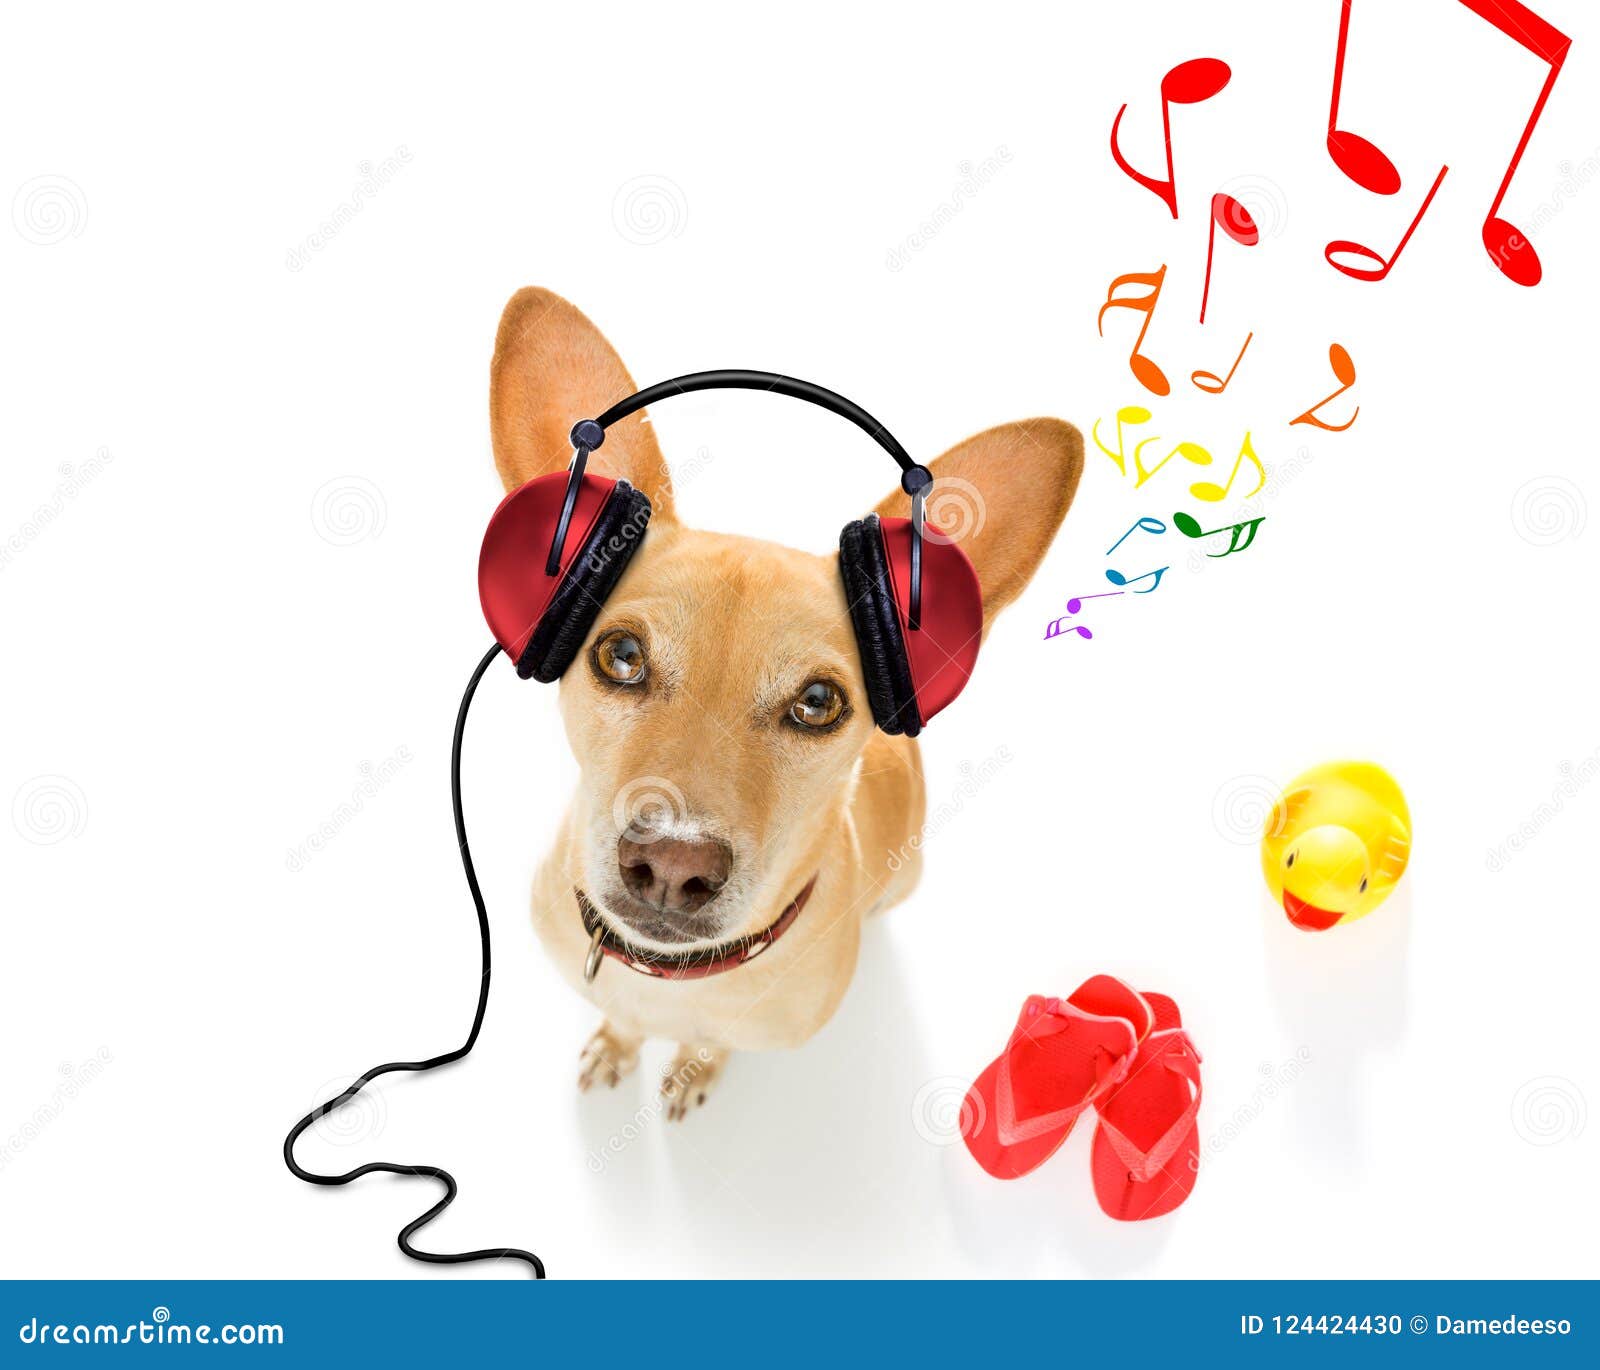 chihuahua listening to music meme